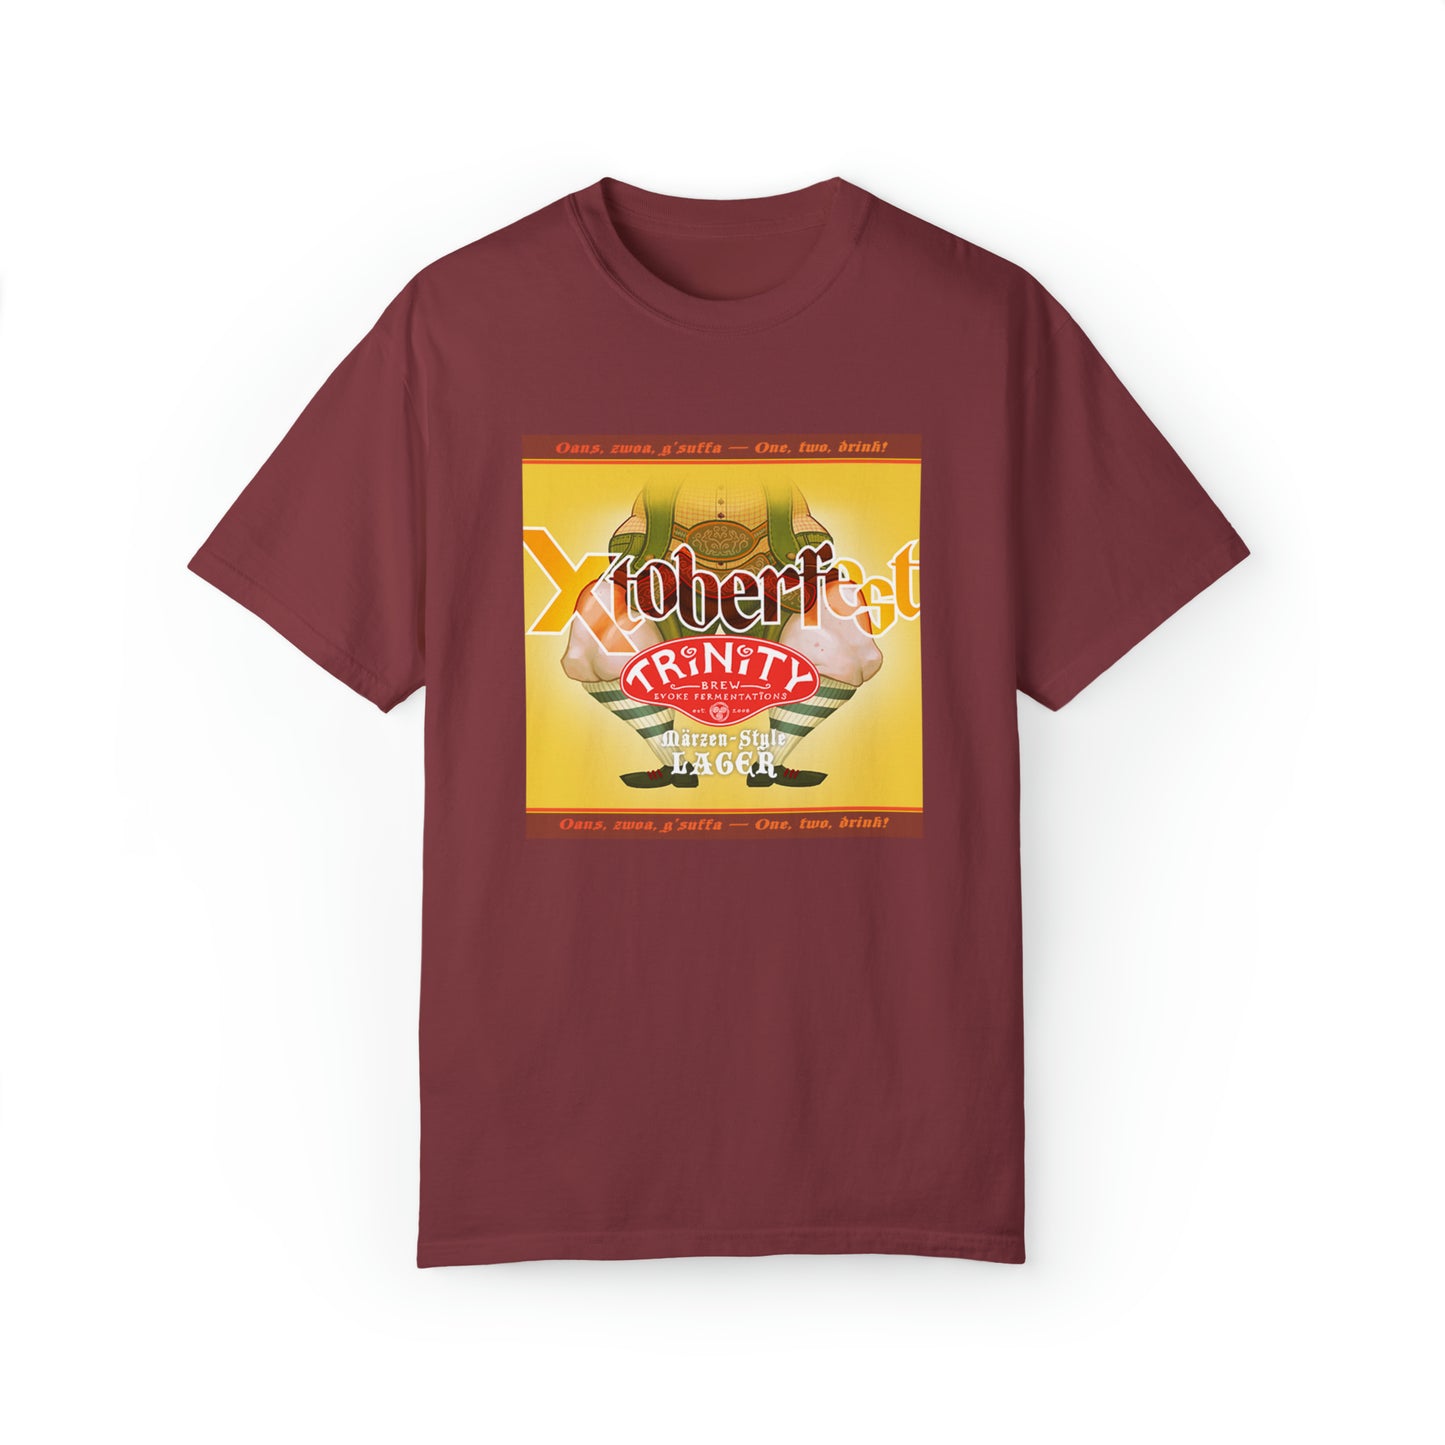 TRiNiTY Xtoberfest (Darker Colors) Oktoberfest T-Shirt - Unisex Garment-Dyed T-shirt